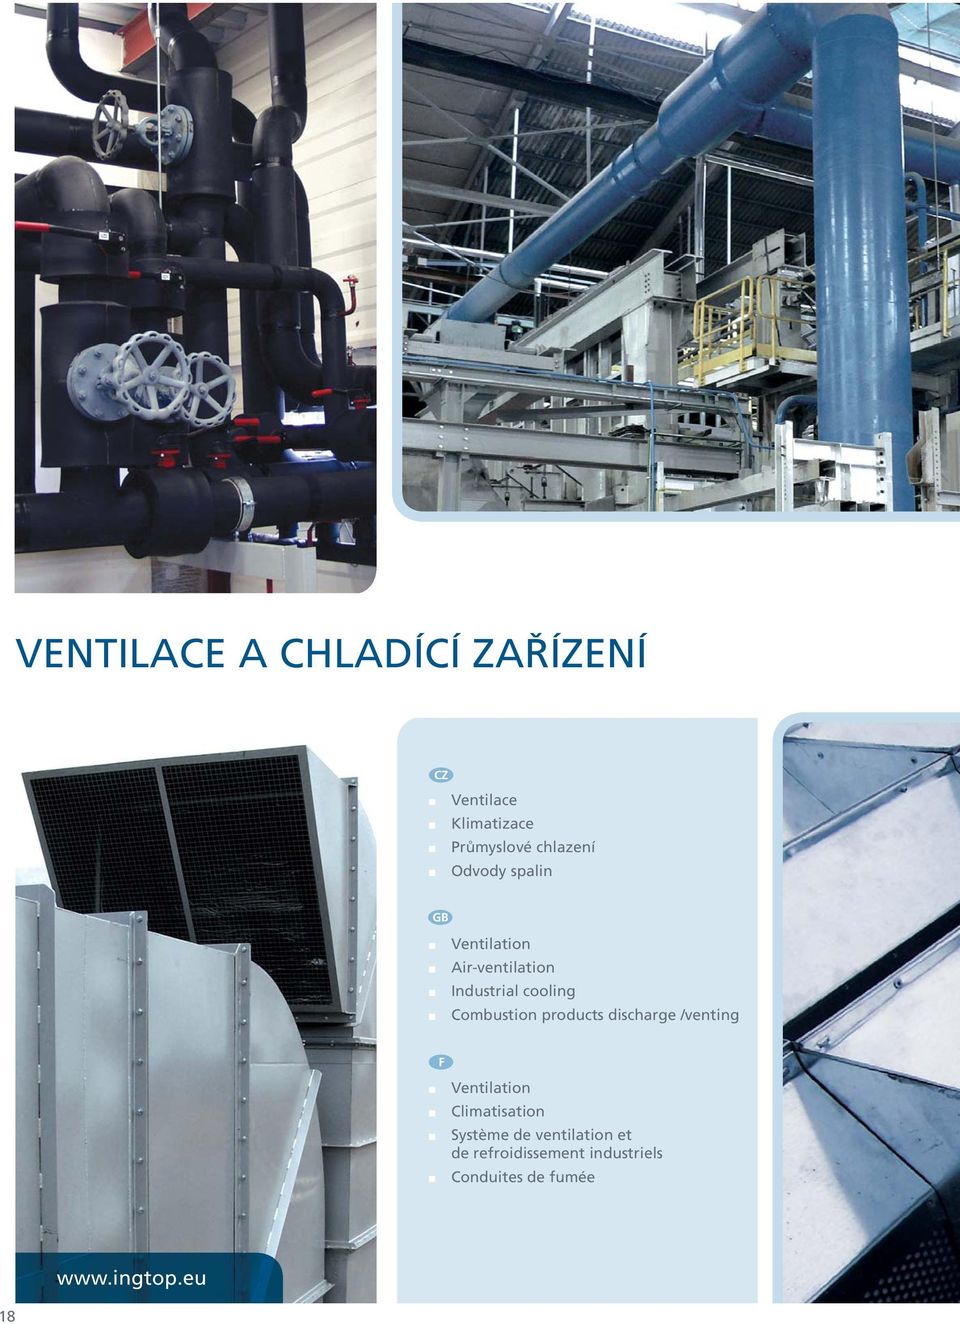 products discharge /venting F Ventilation Climatisation Système de